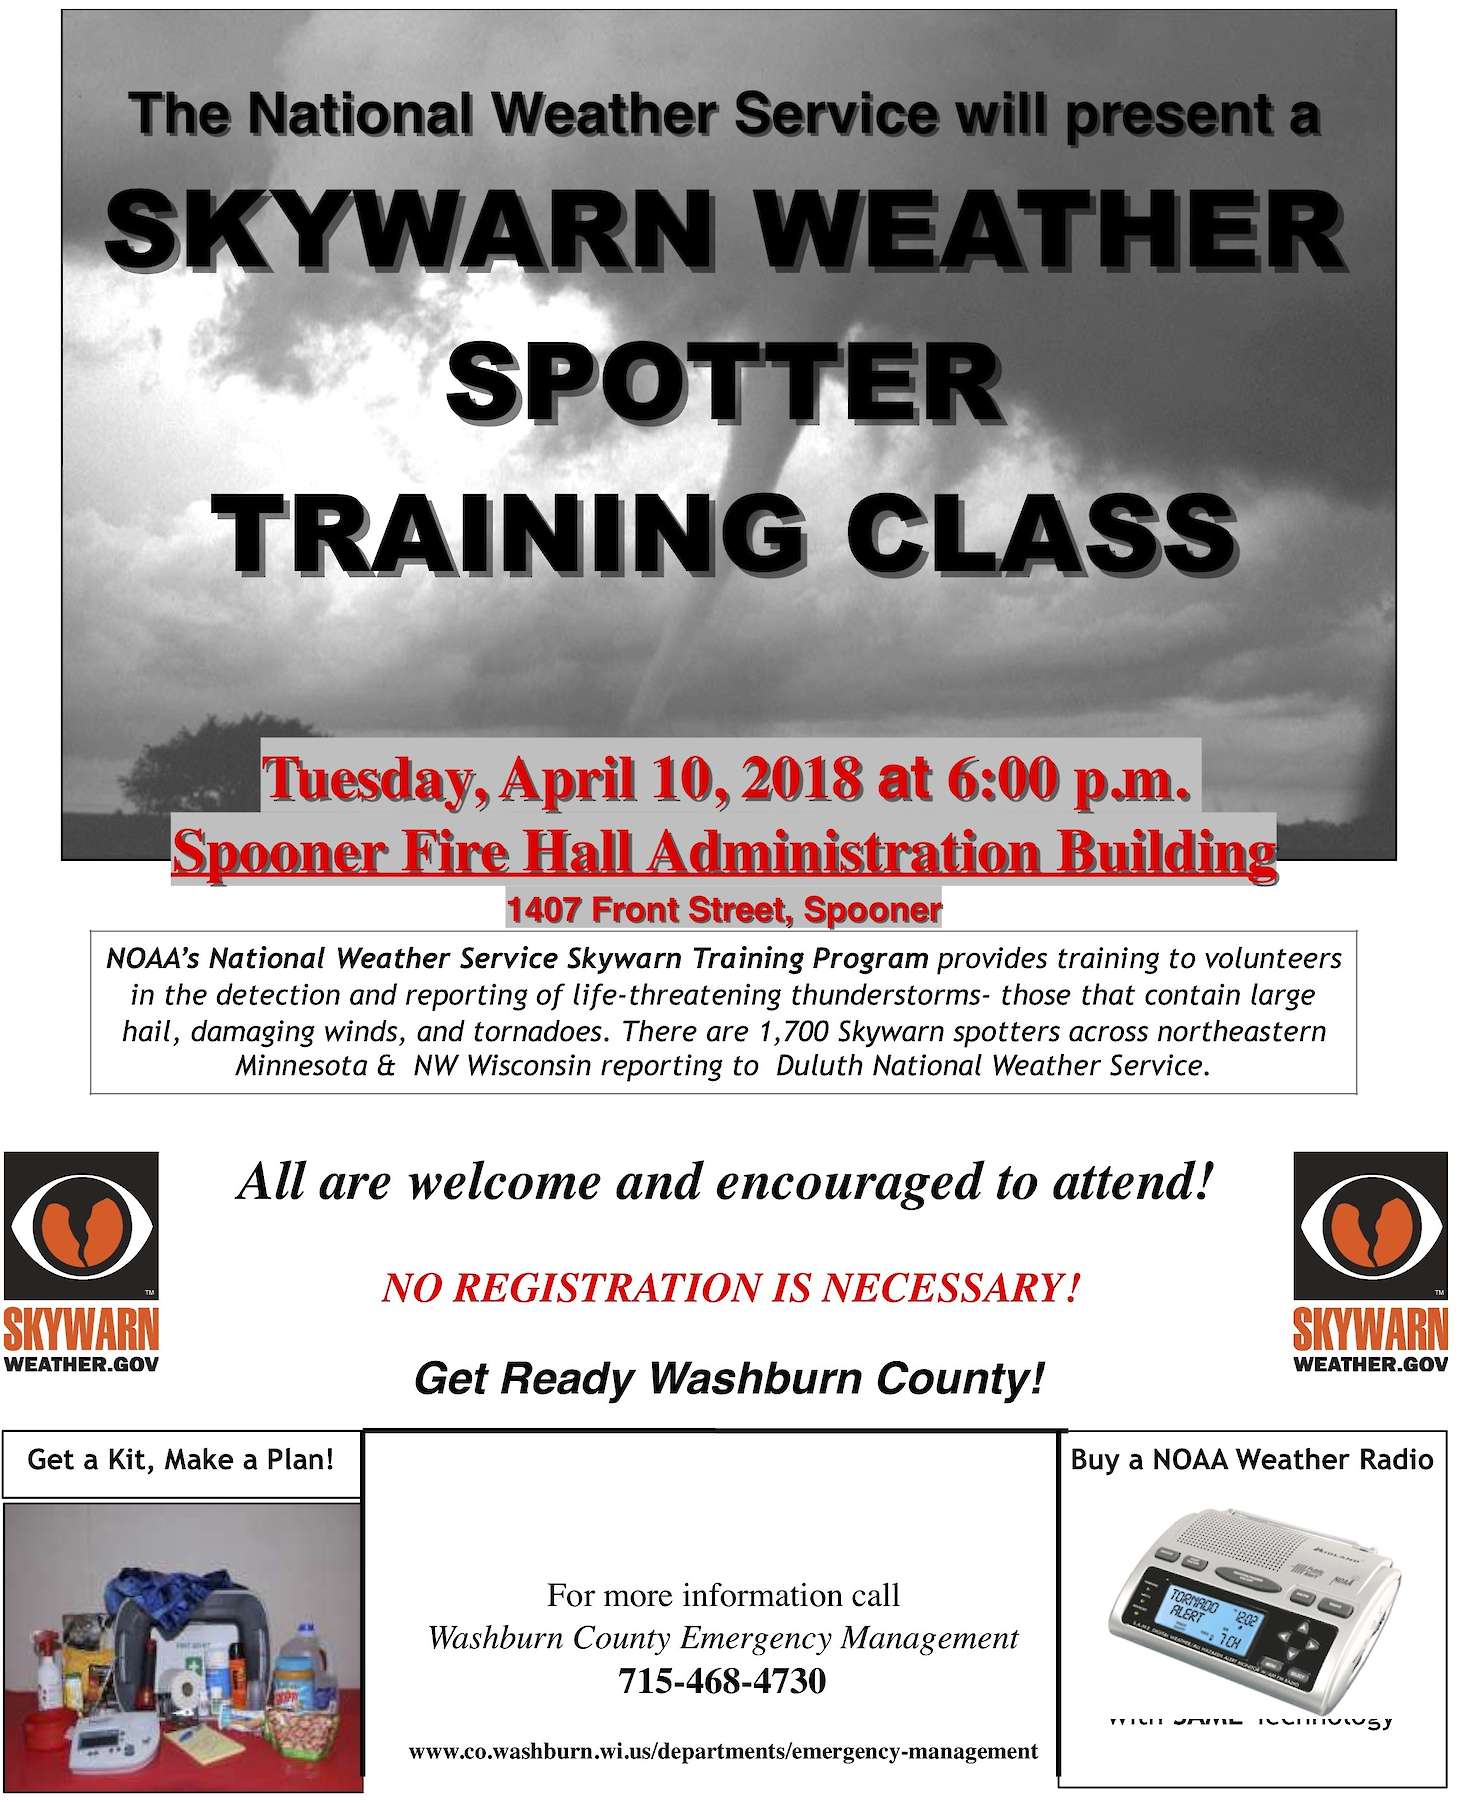 Skywarn Weather Spotter Training Class Scheduled in Spooner Recent